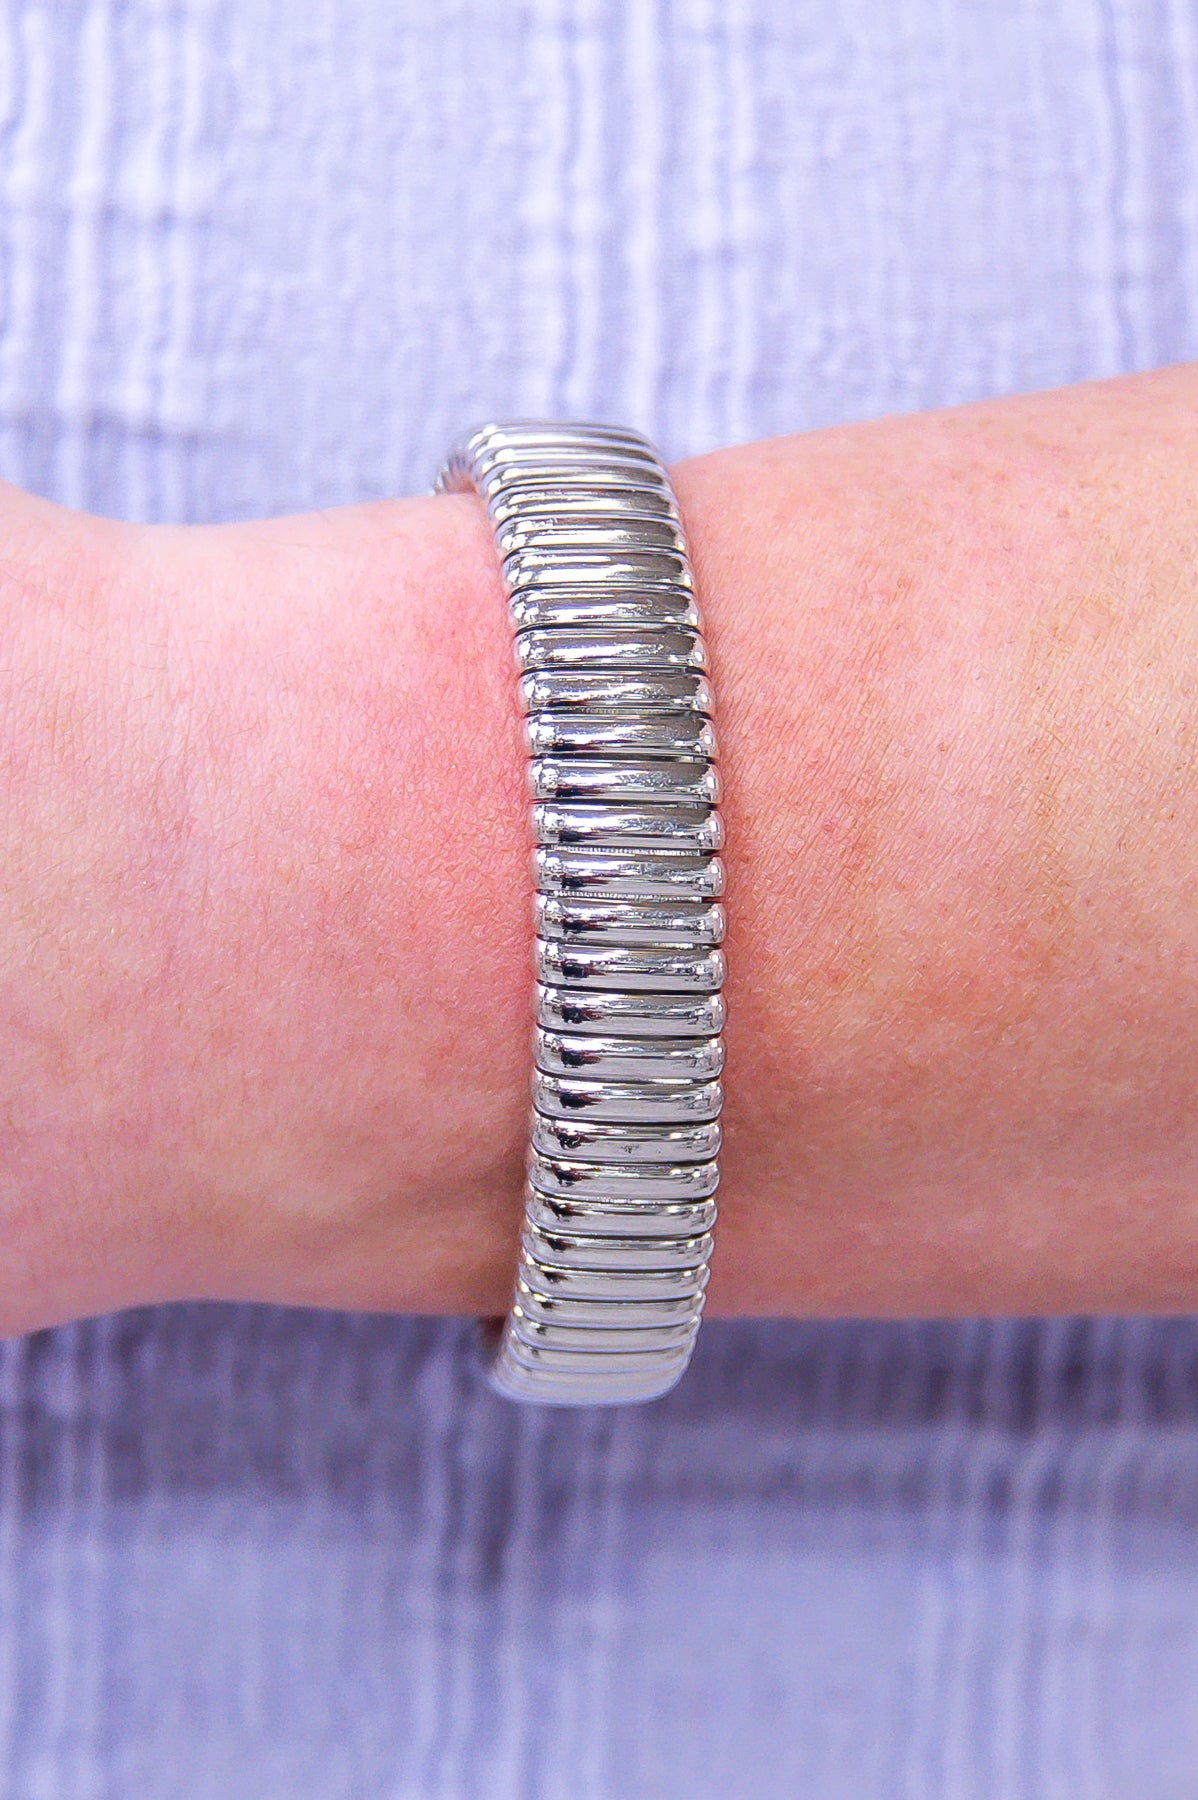 Silver Textured Cuff Bracelet - BRC3415SI